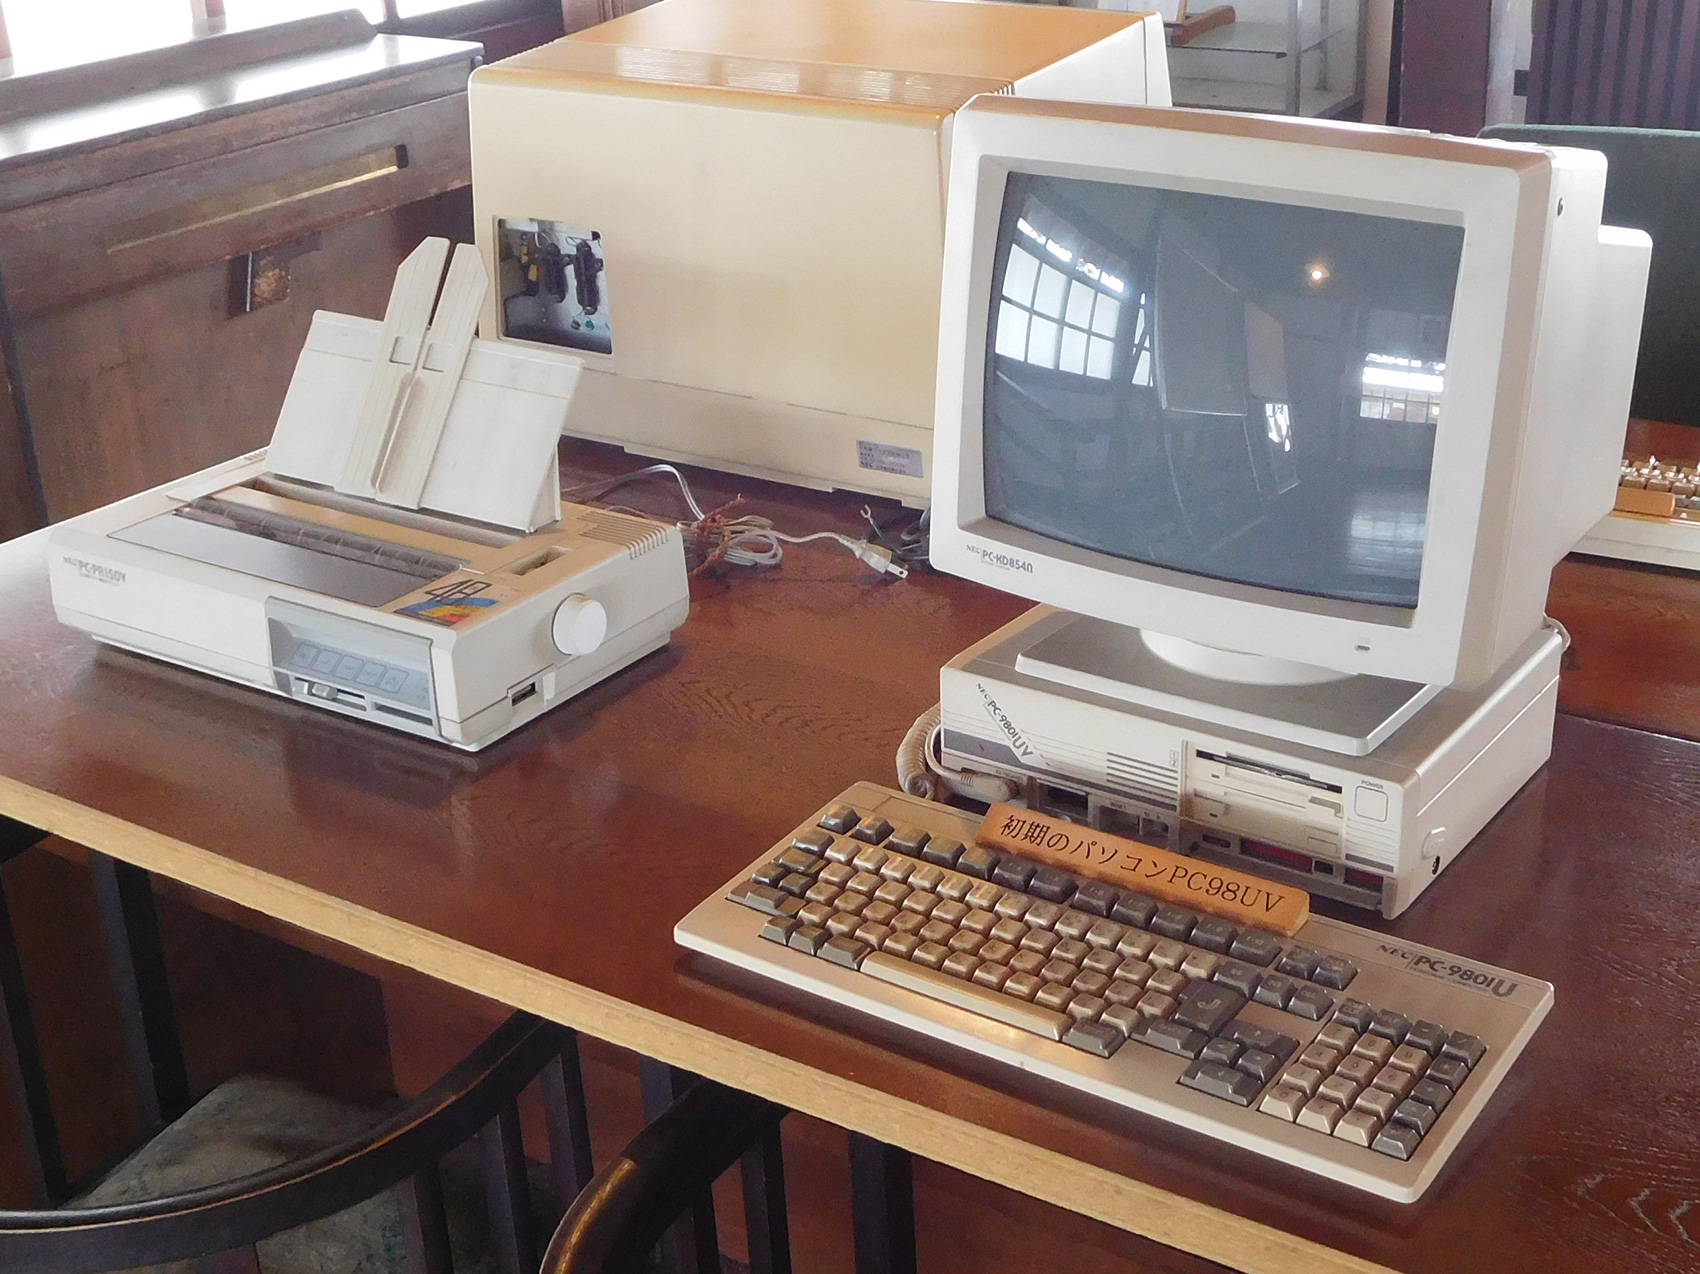 PC-9800 series - Wikipedia